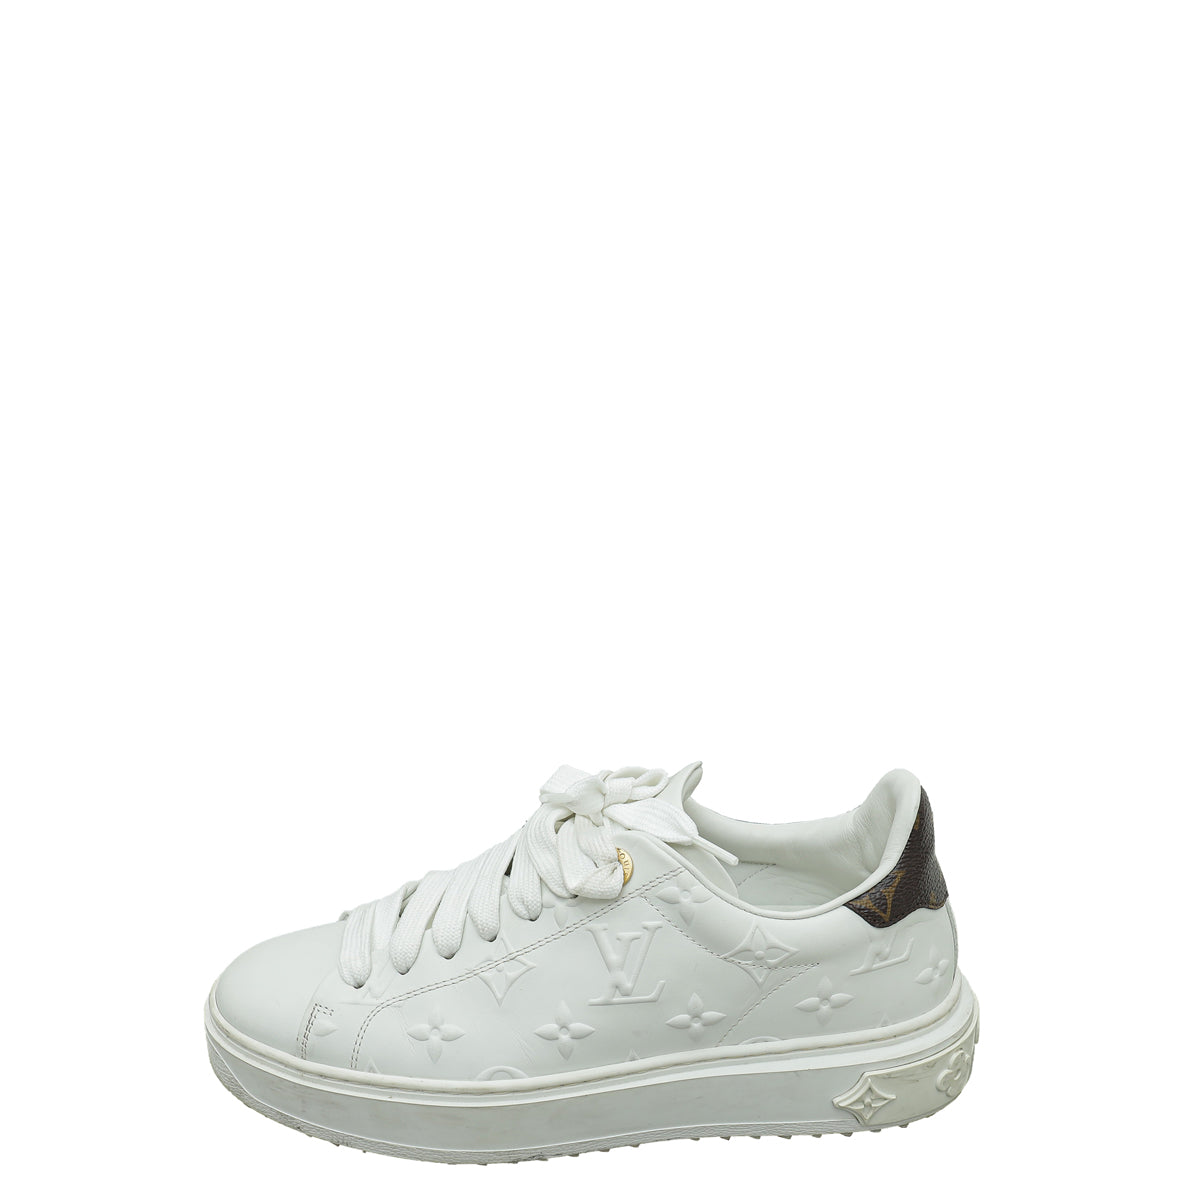 Louis Vuitton Time Out Sneaker White. Size 35.5